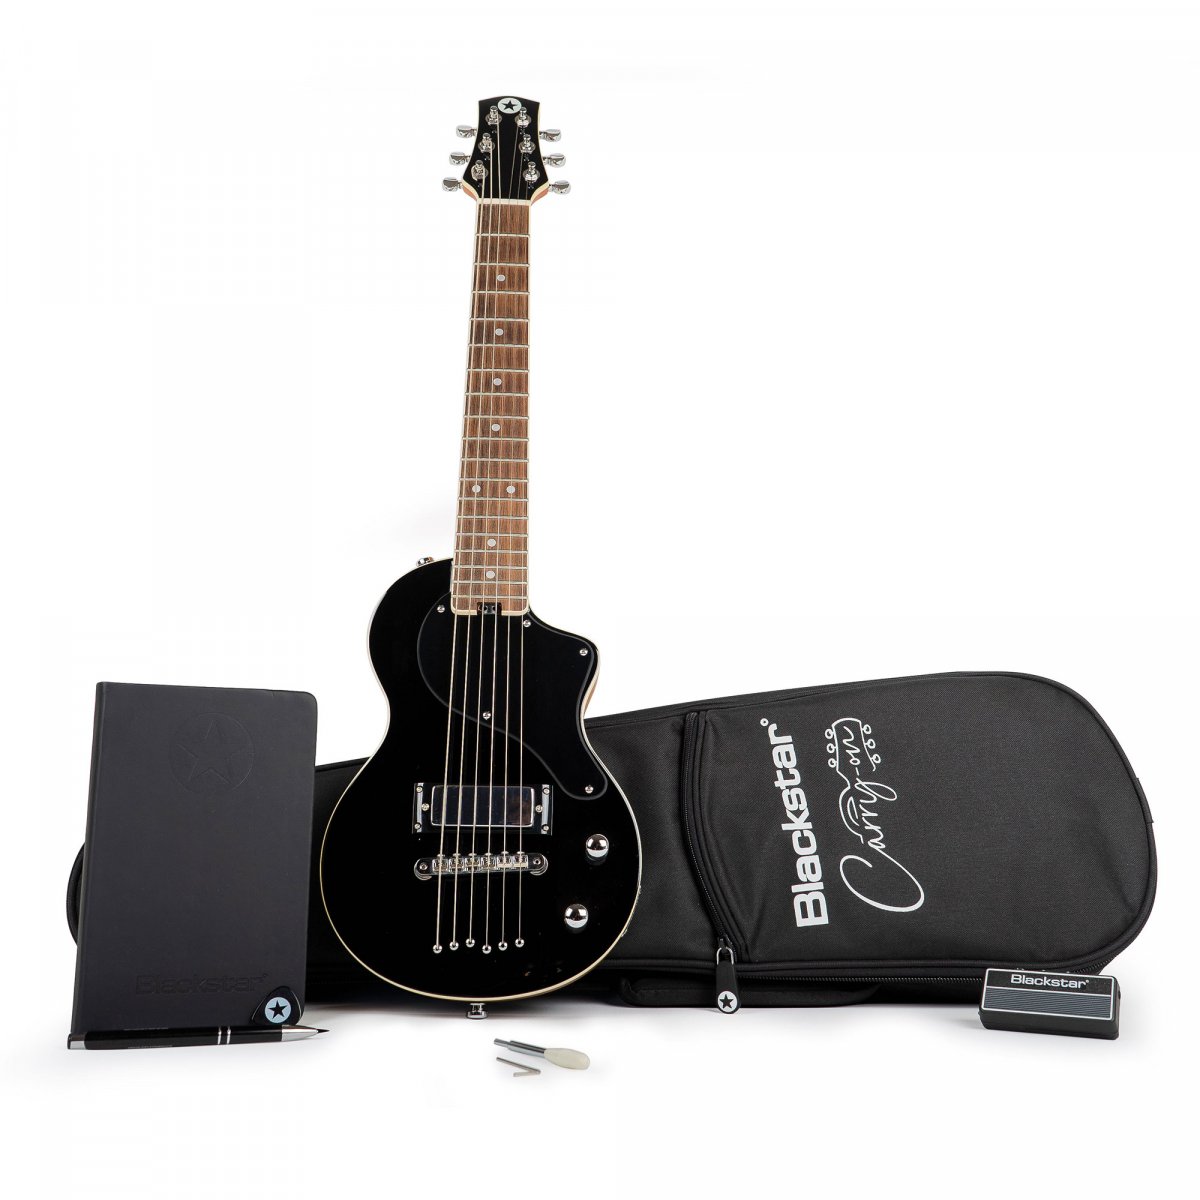 Guitar - Blackstar Carry-on Travel Guitar Pack - Sort